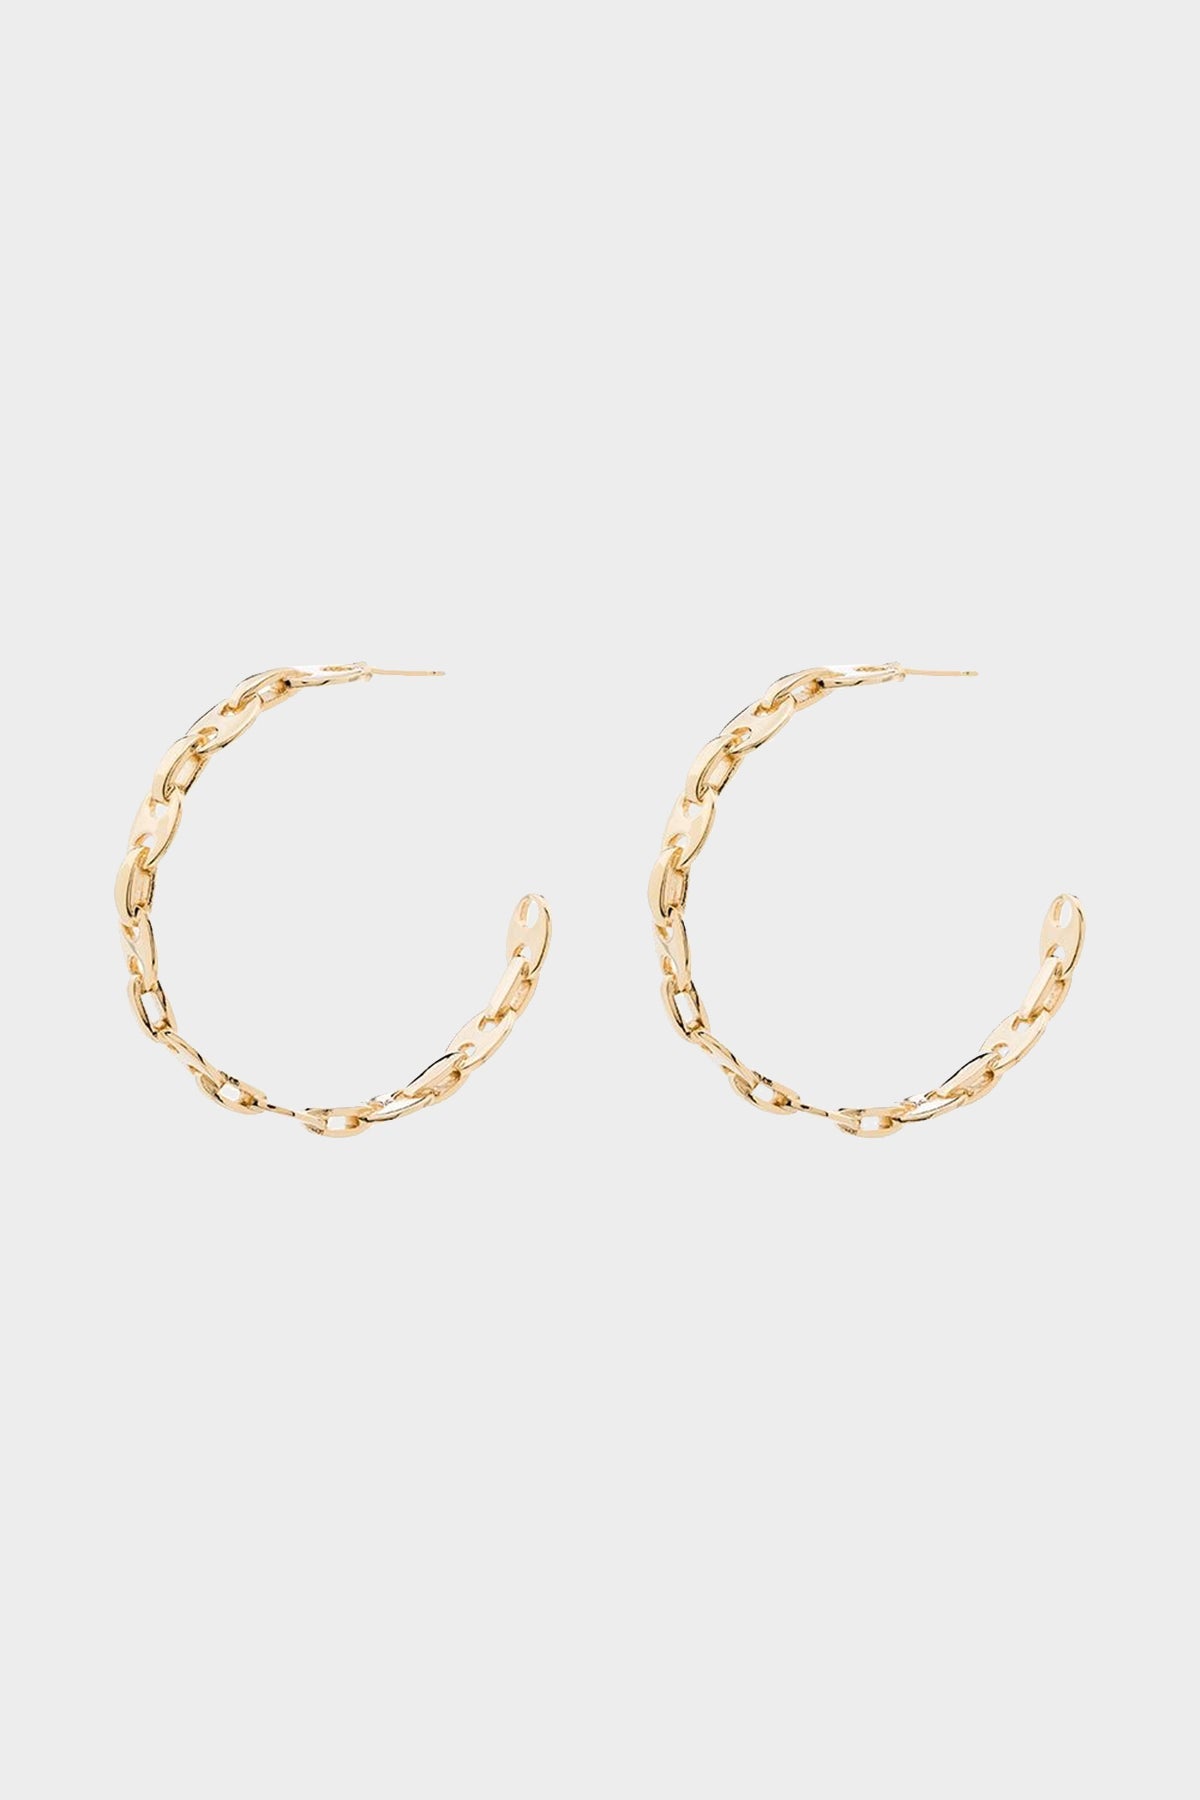 Chain-Link Hoops Earrings in Gold - shop-olivia.com